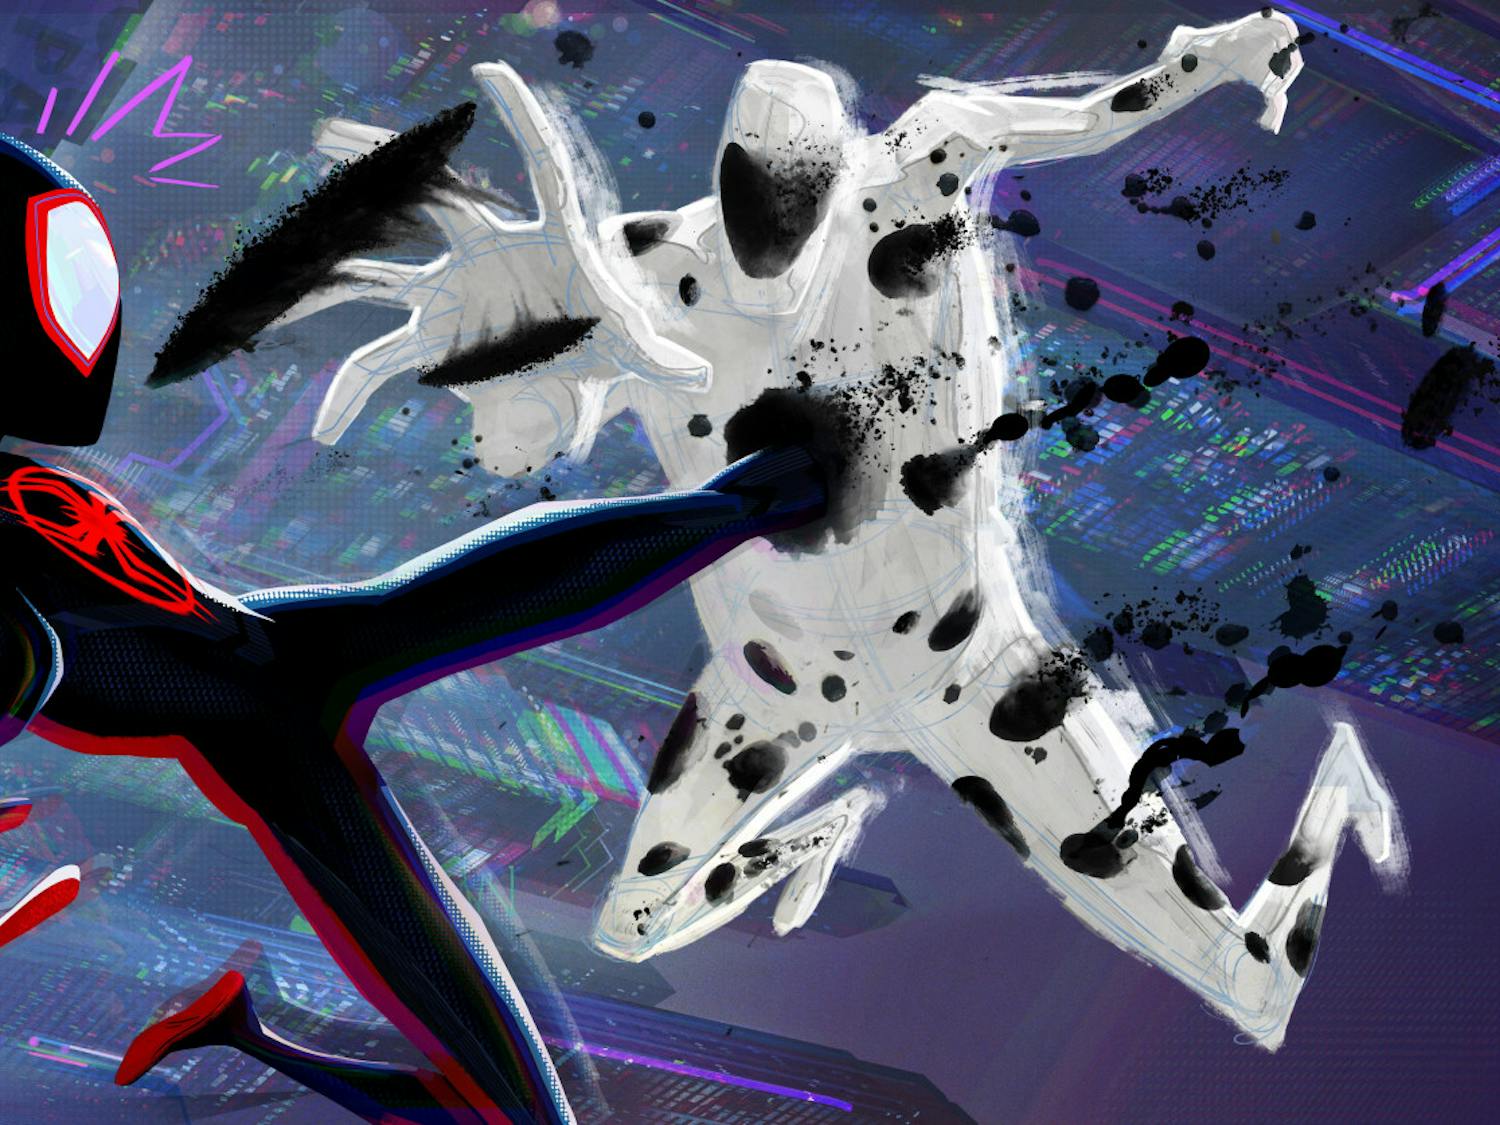 SPIDER-MAN™: ACROSS THE SPIDER-VERSE